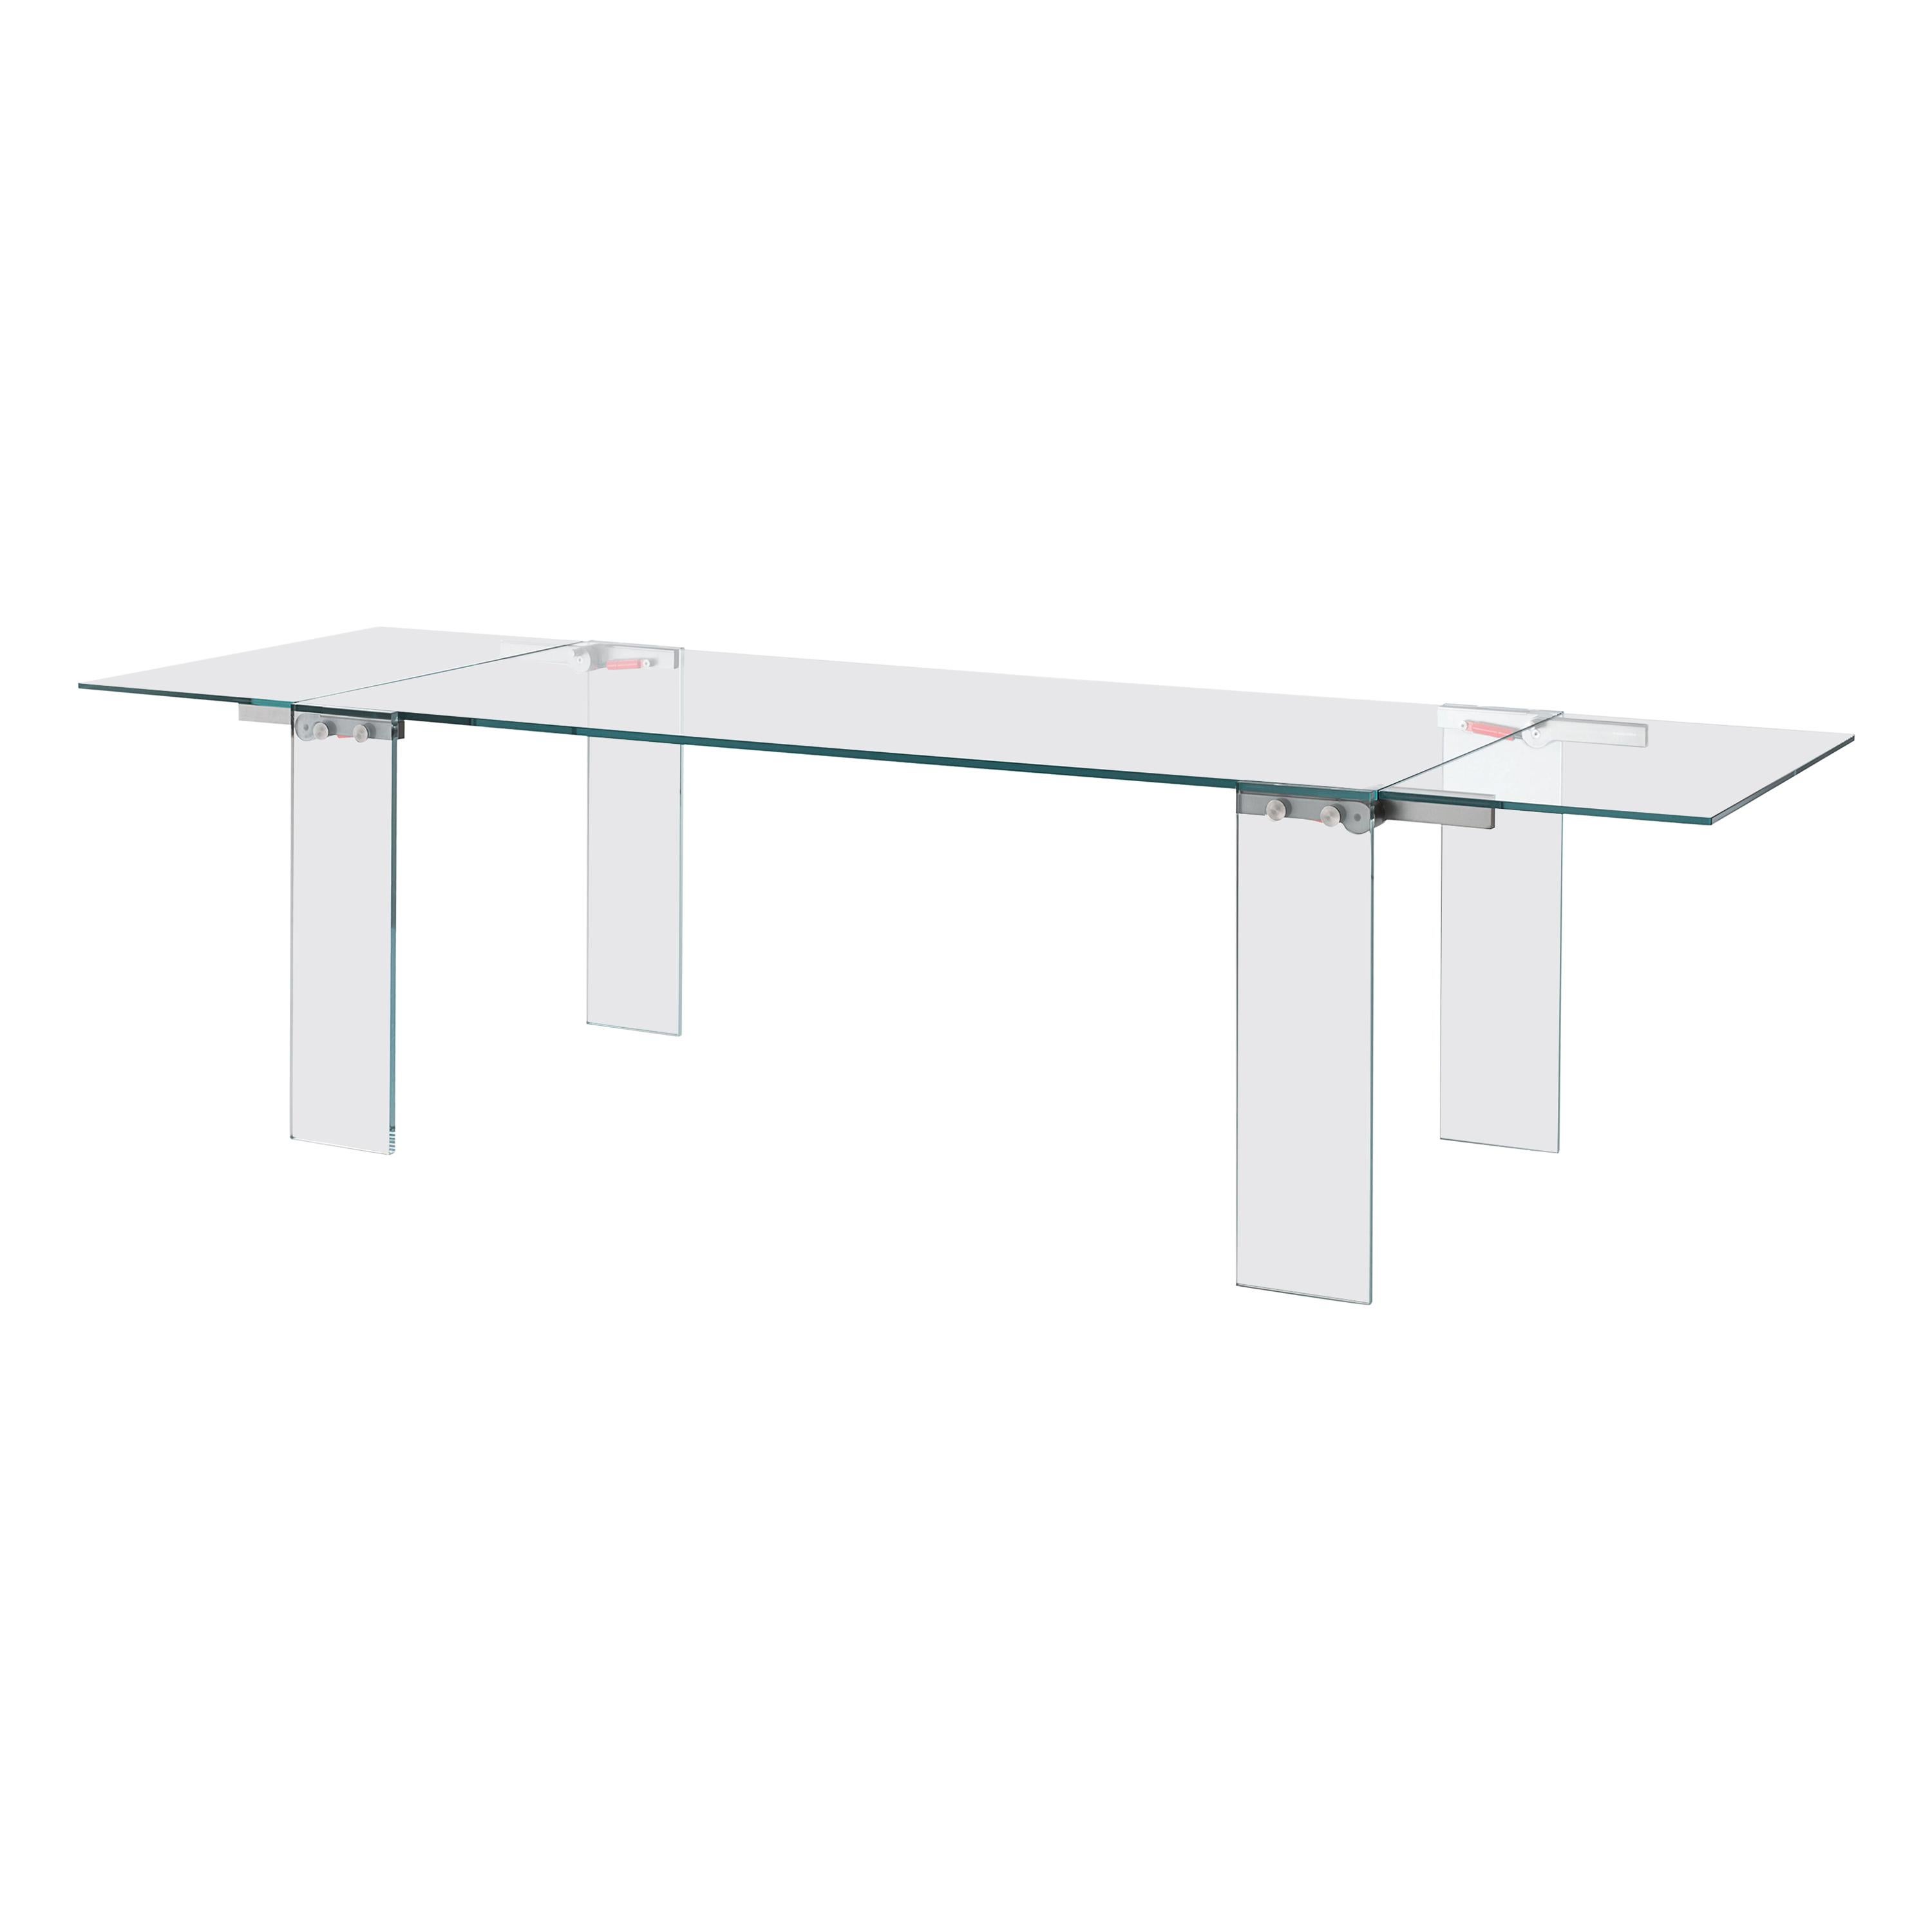 NAKED Extendible Rectangular Transparent Table, by Piero Lissoni, Glas Italia